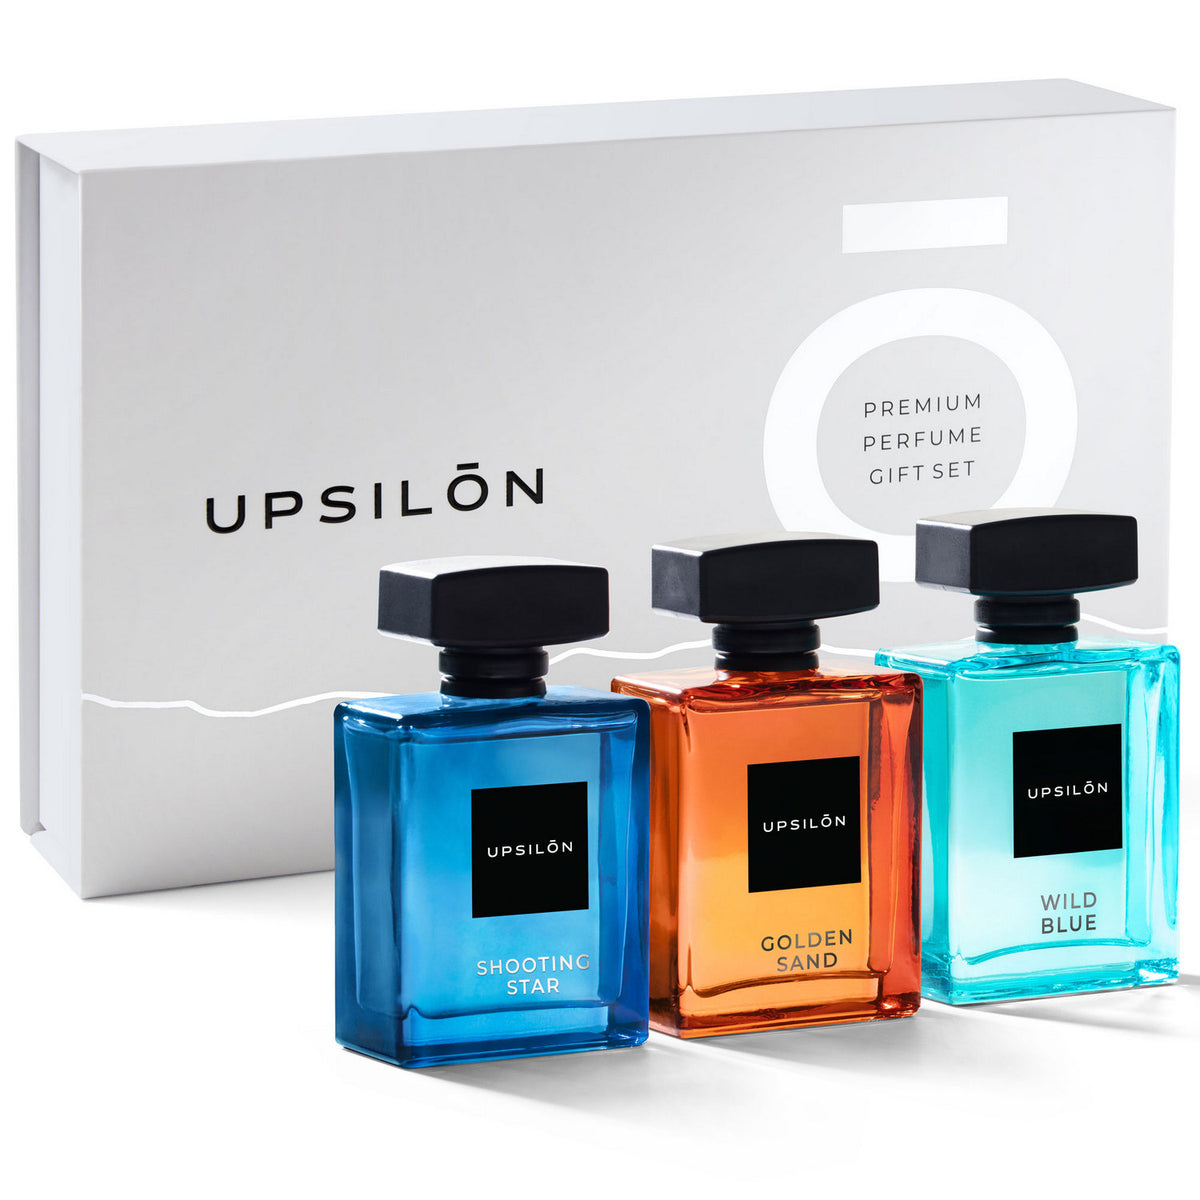 A gift set of three Upsilon Eau de Parfum fragrances for men: Shooting Star, Golden Sand, and Wild Blue, 100ml